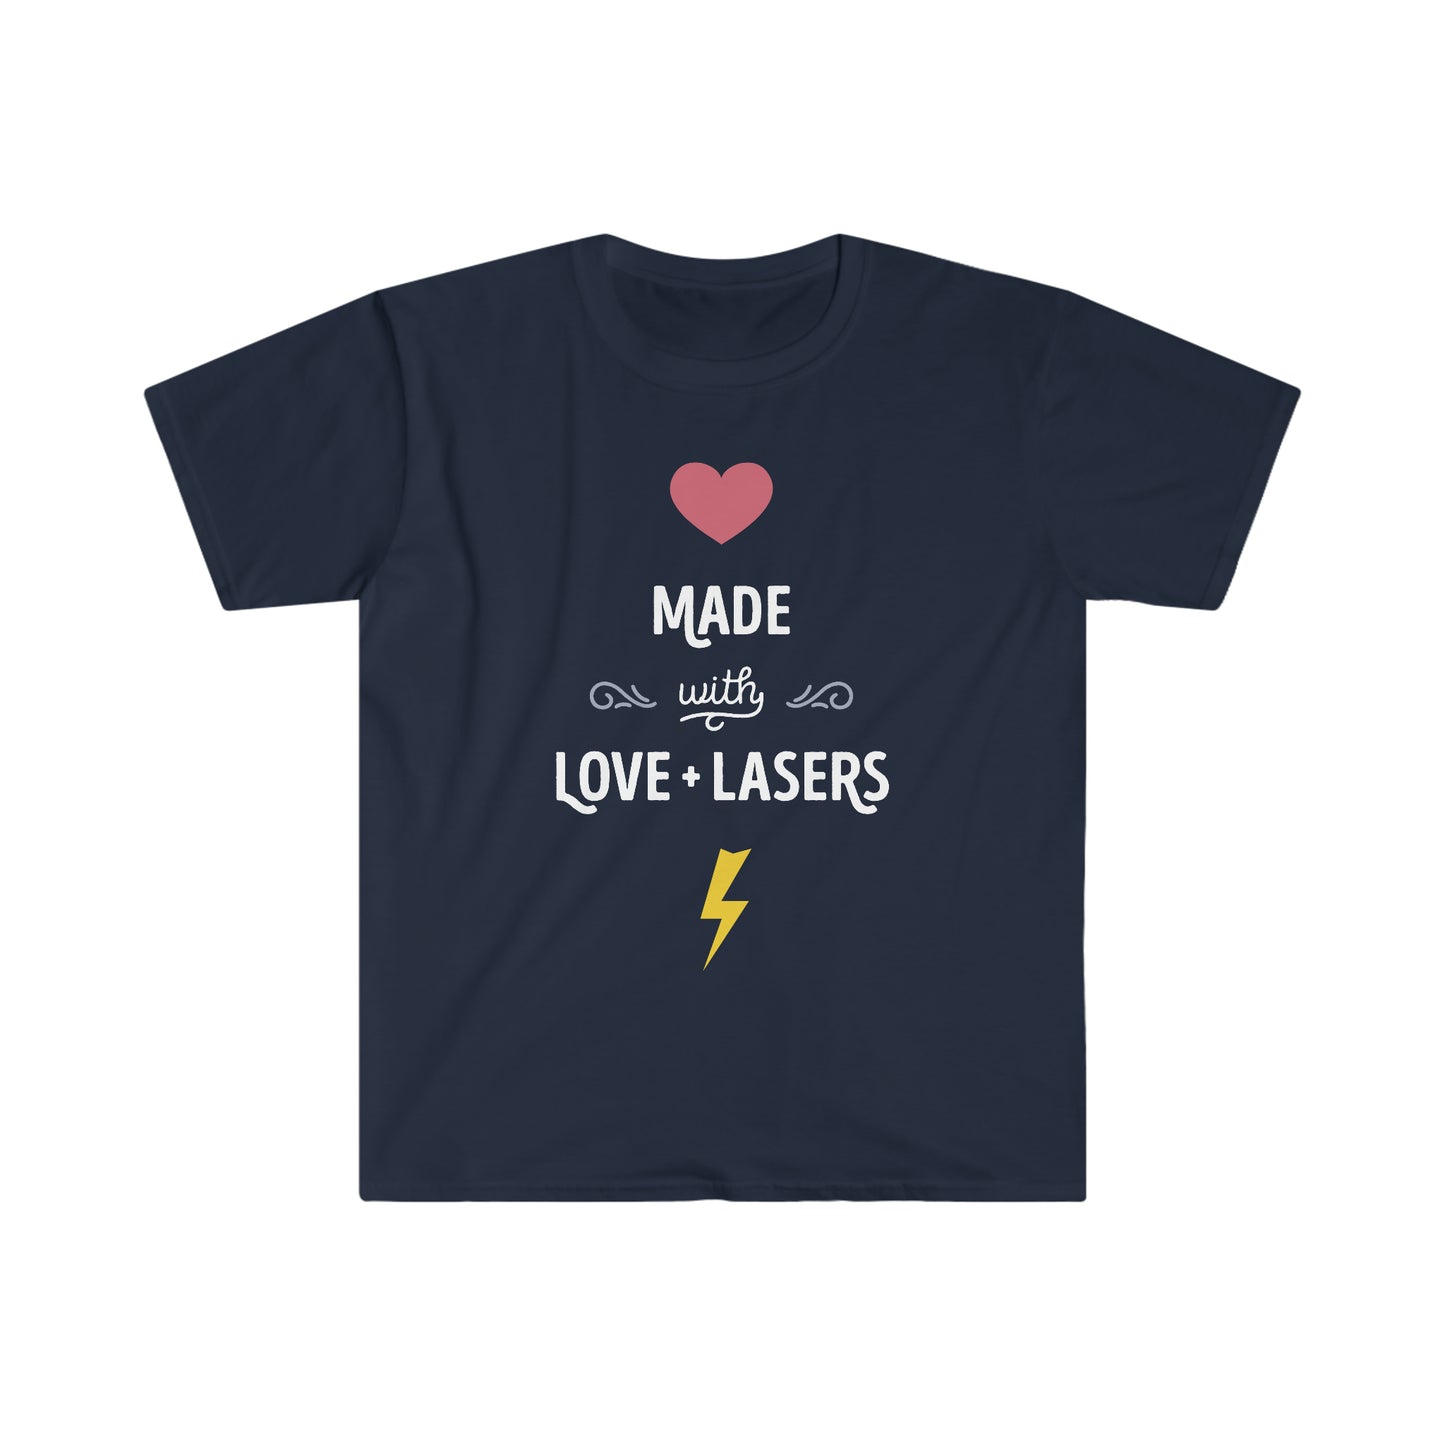 Love + Lasers Shirt